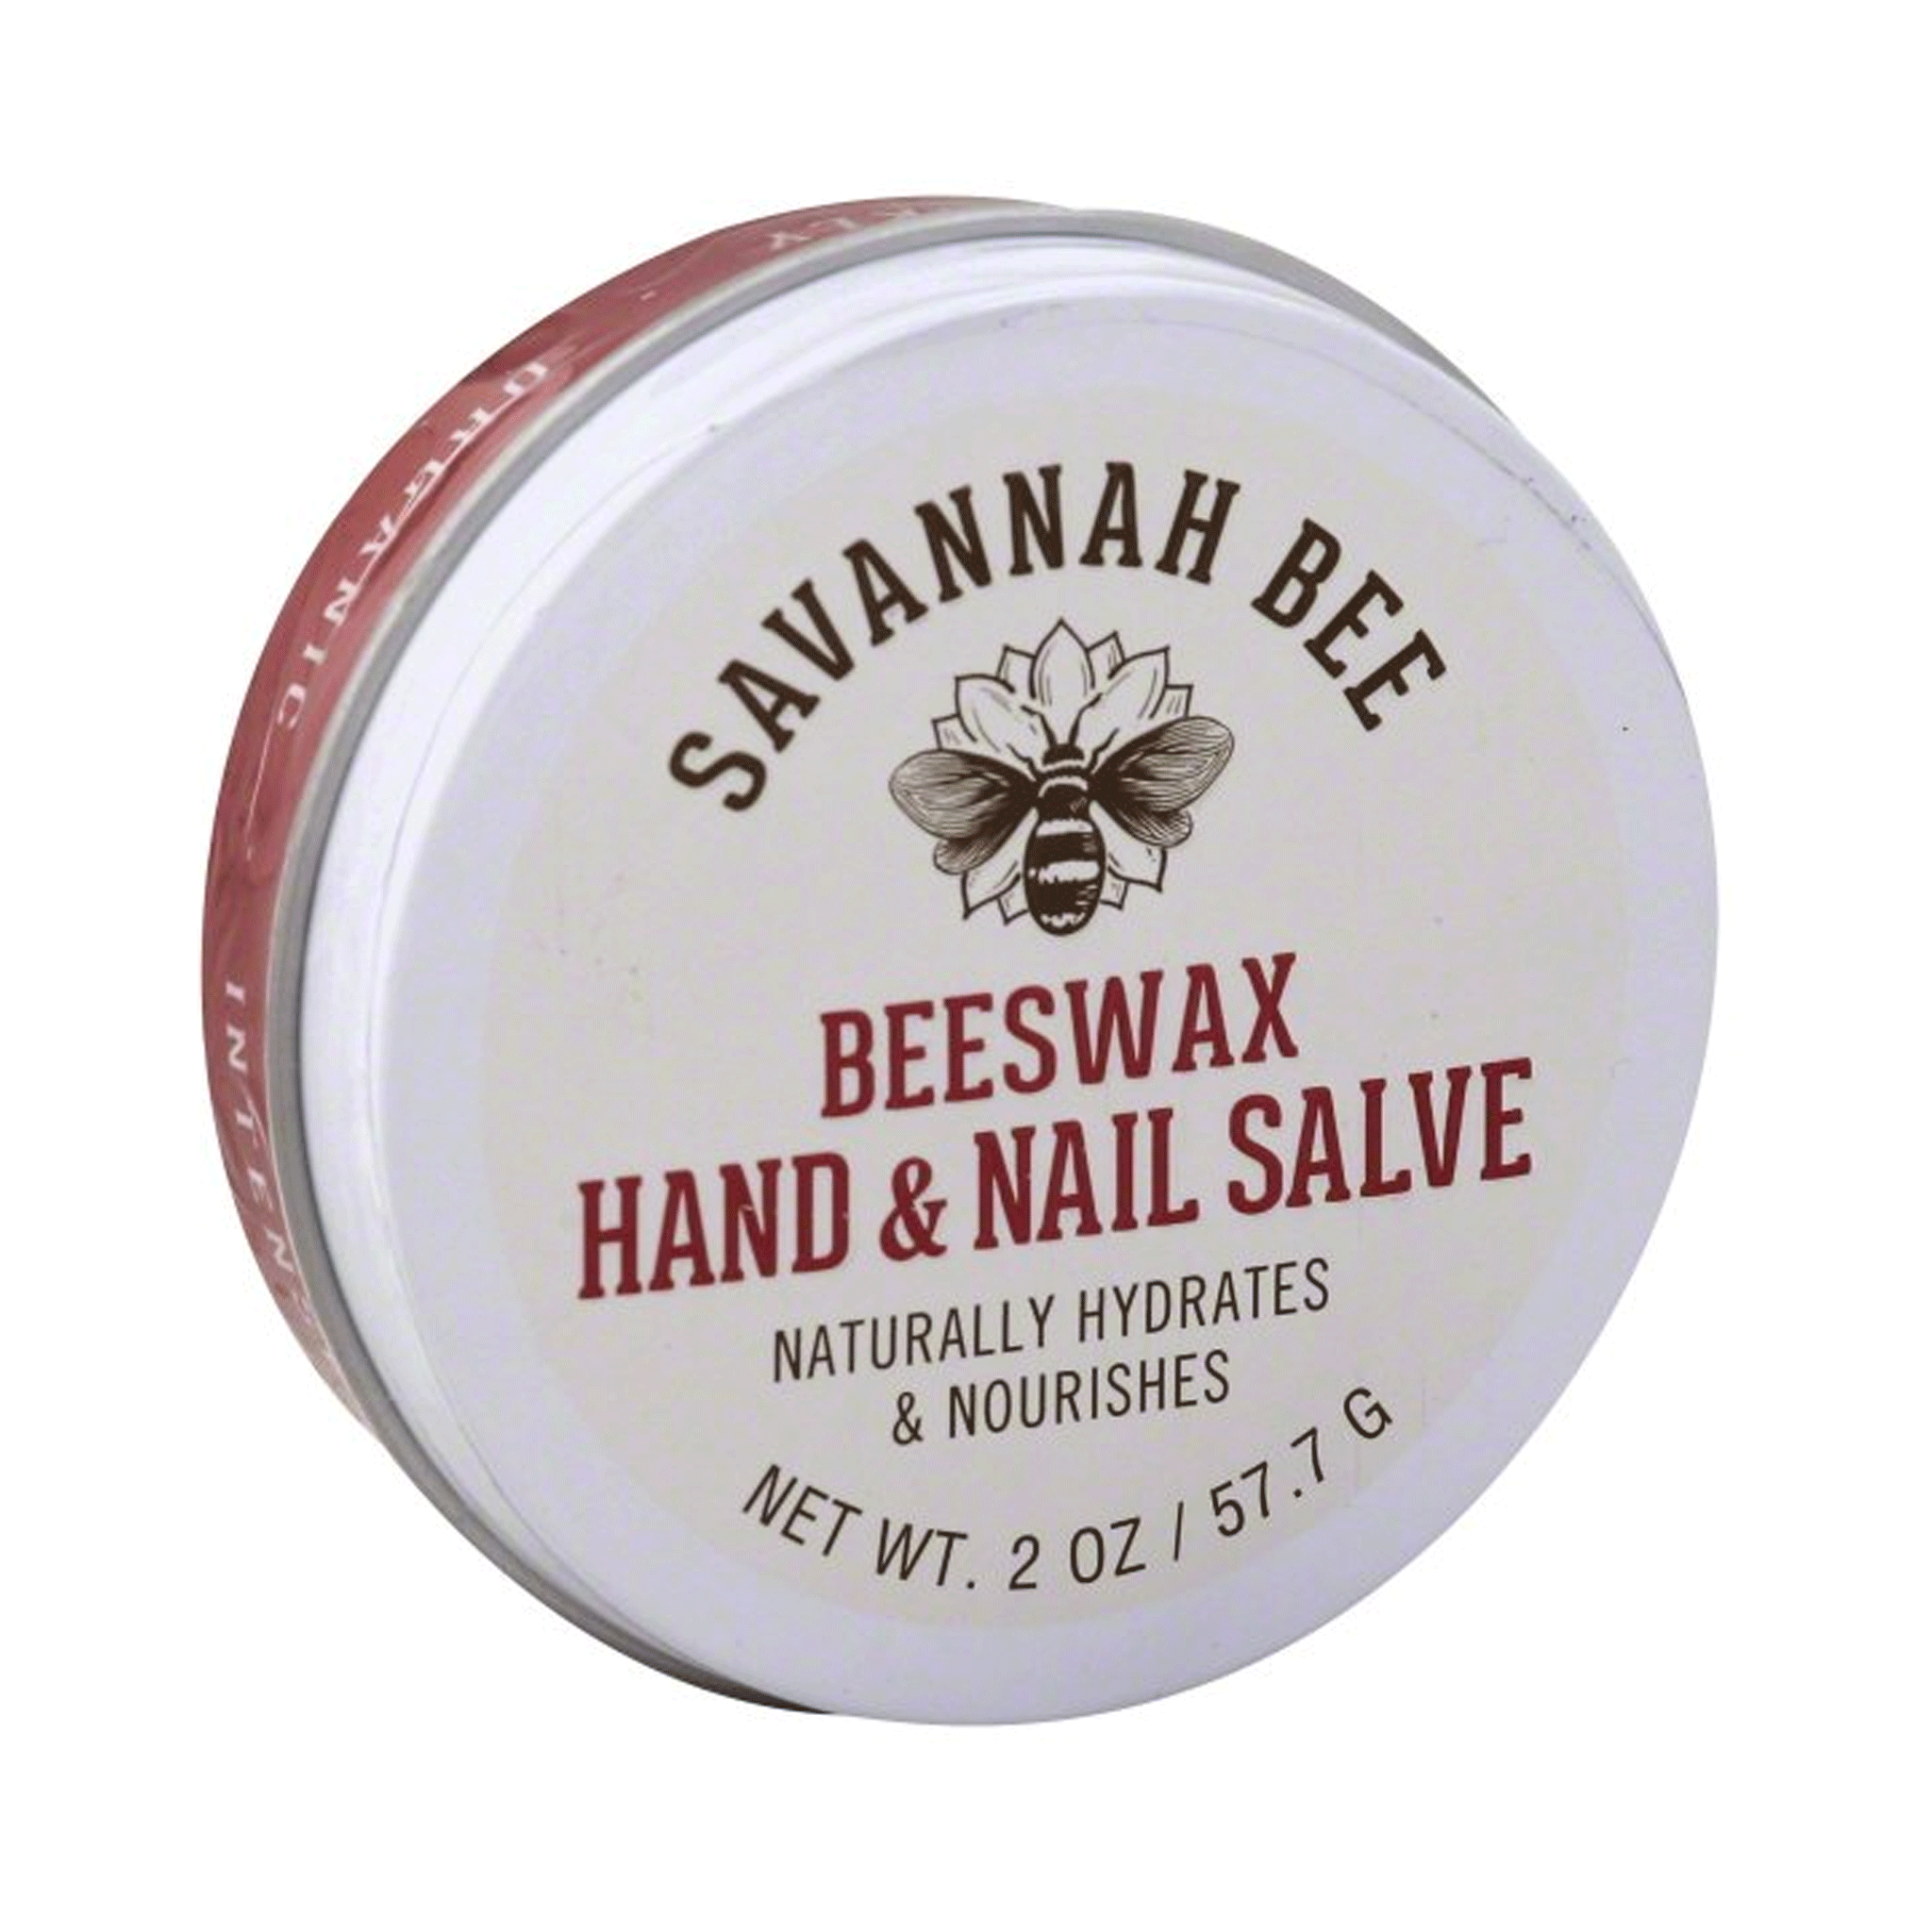 Savannah Bee Cedar Beeswax Hand Cream